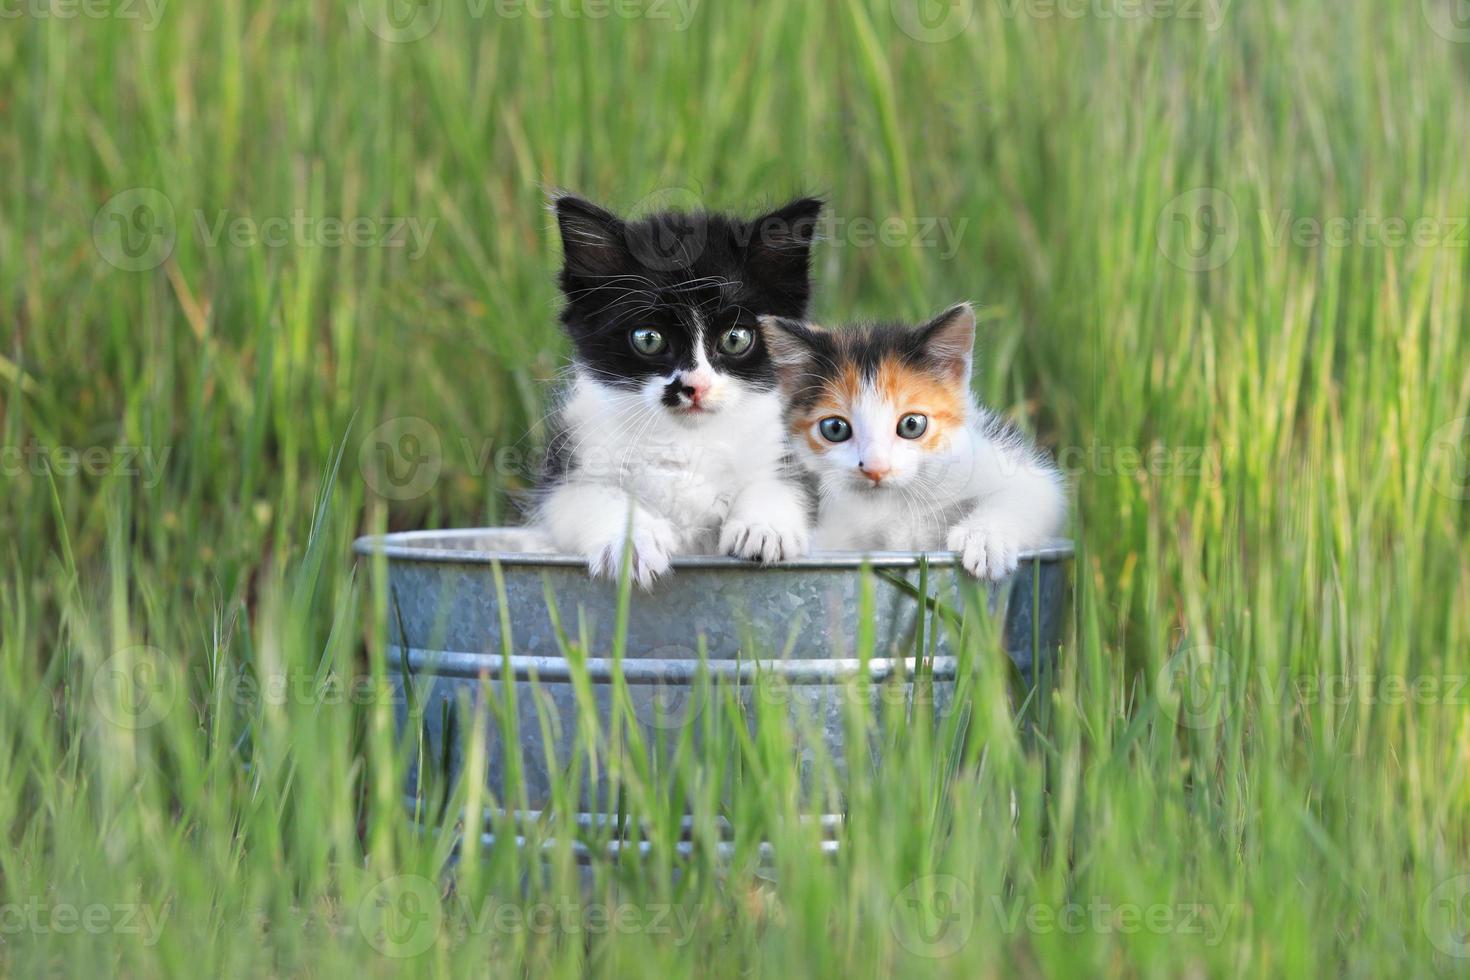 Kittens Outdoors in Tall Green Grass photo